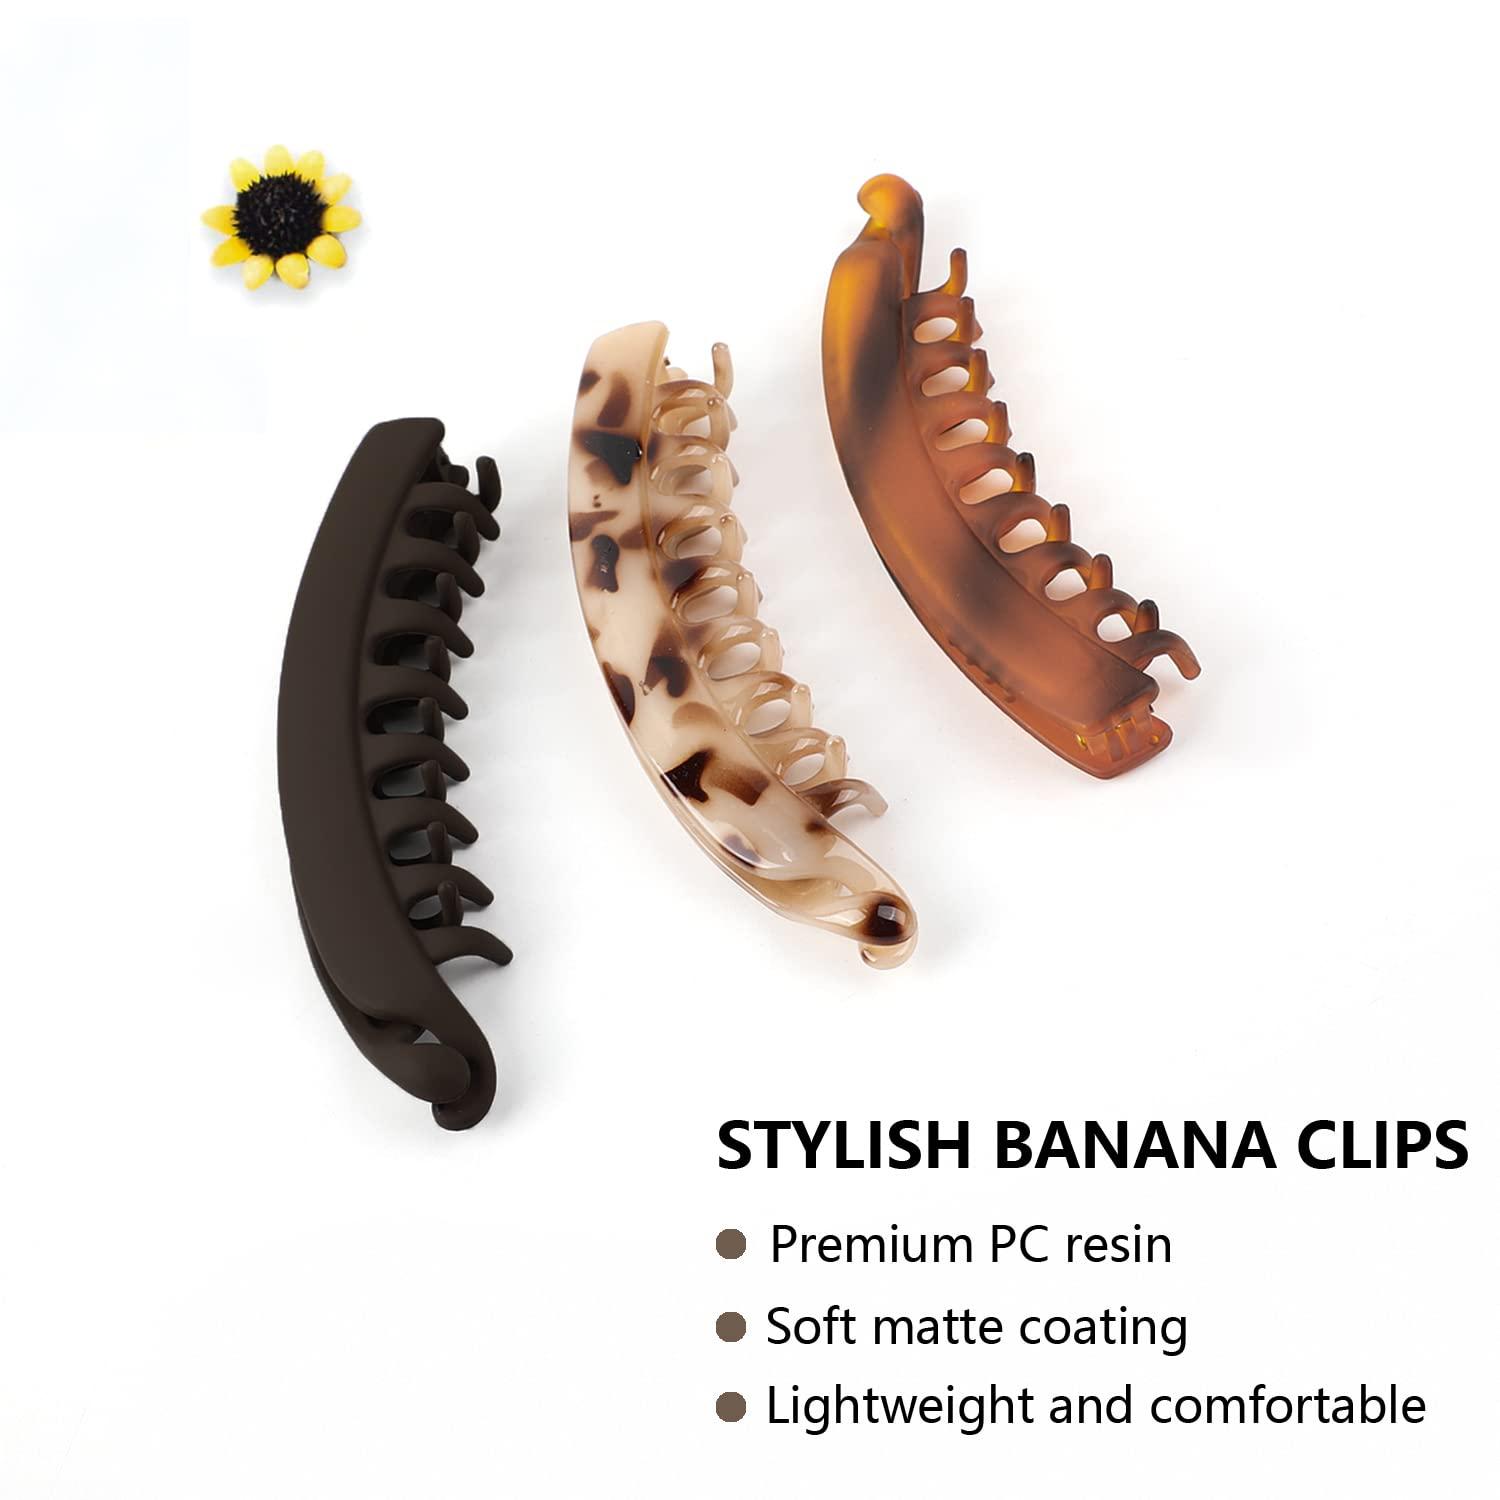 Medium size Hair banana clip in Brown - Banana clips